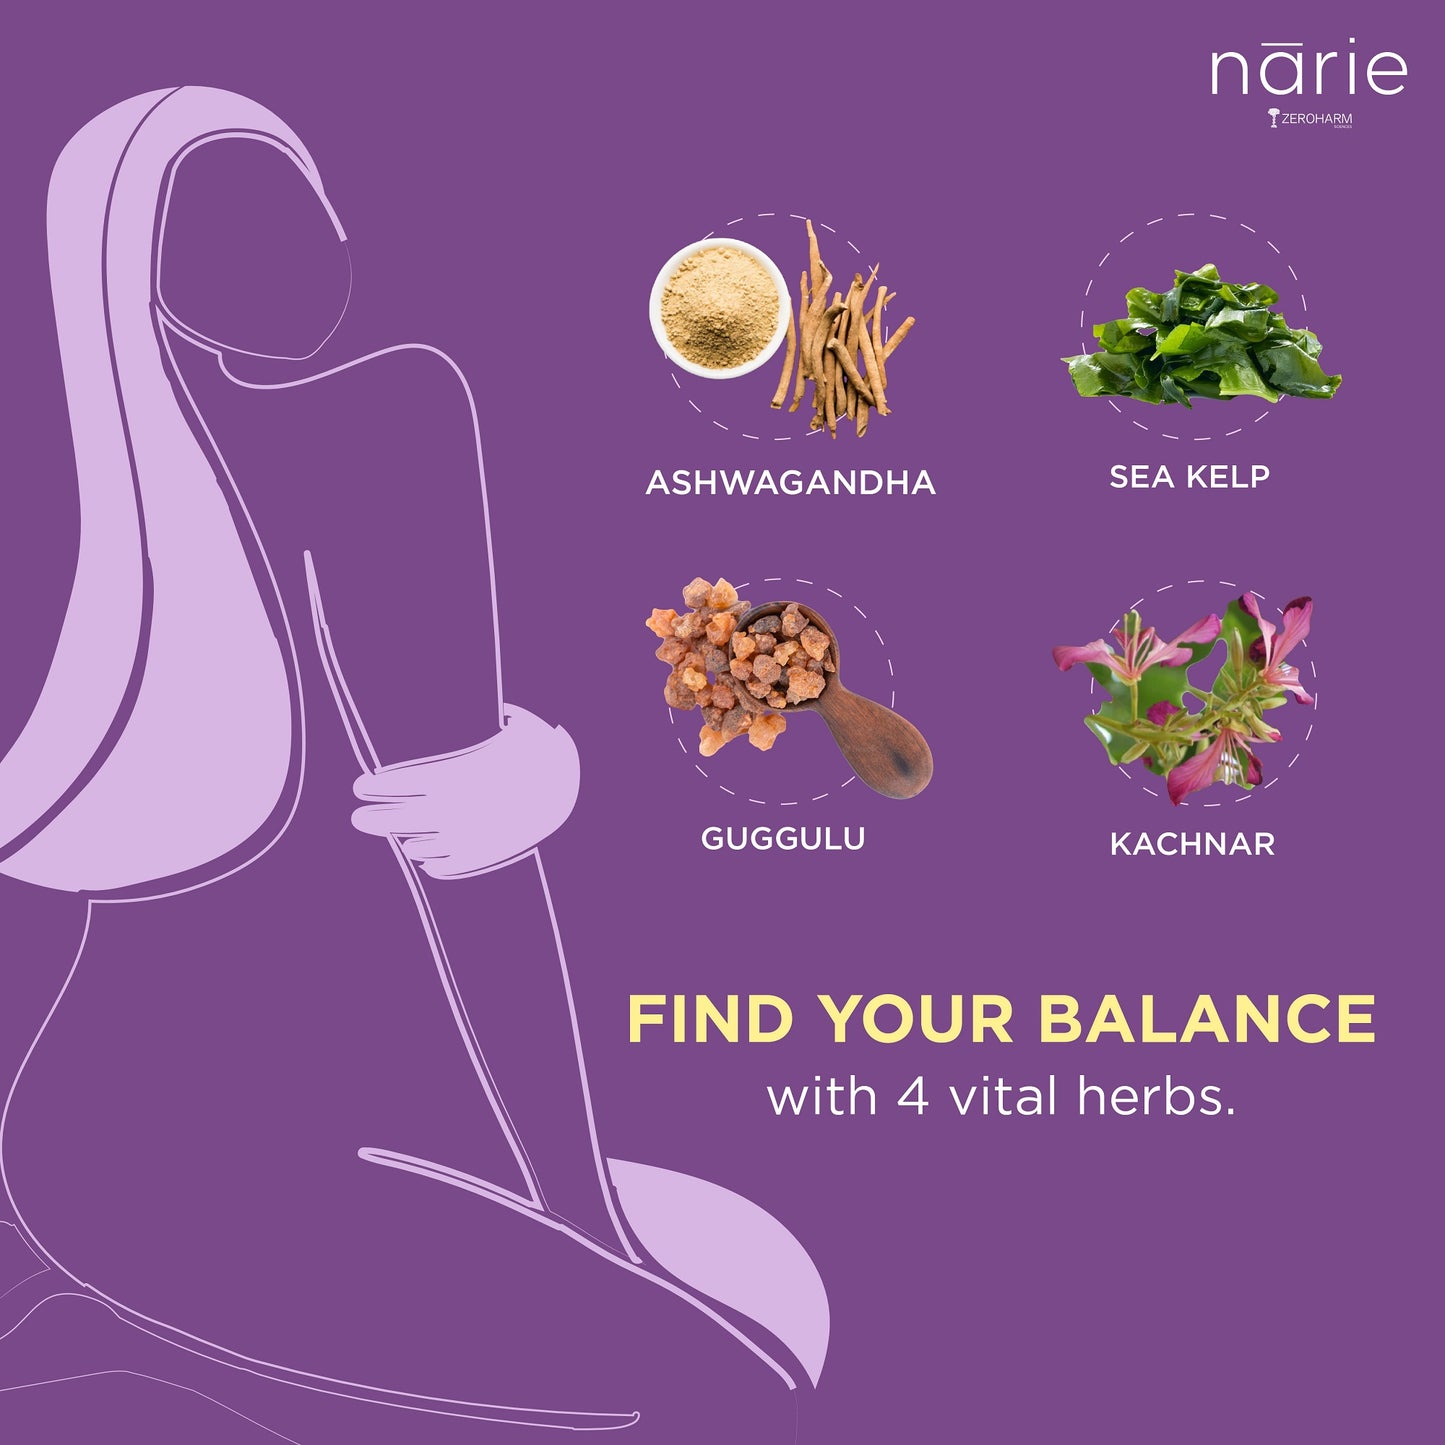 thyroid balance supplements made with herbs like guggulu, kachnar, sea kelp and ashwagandha